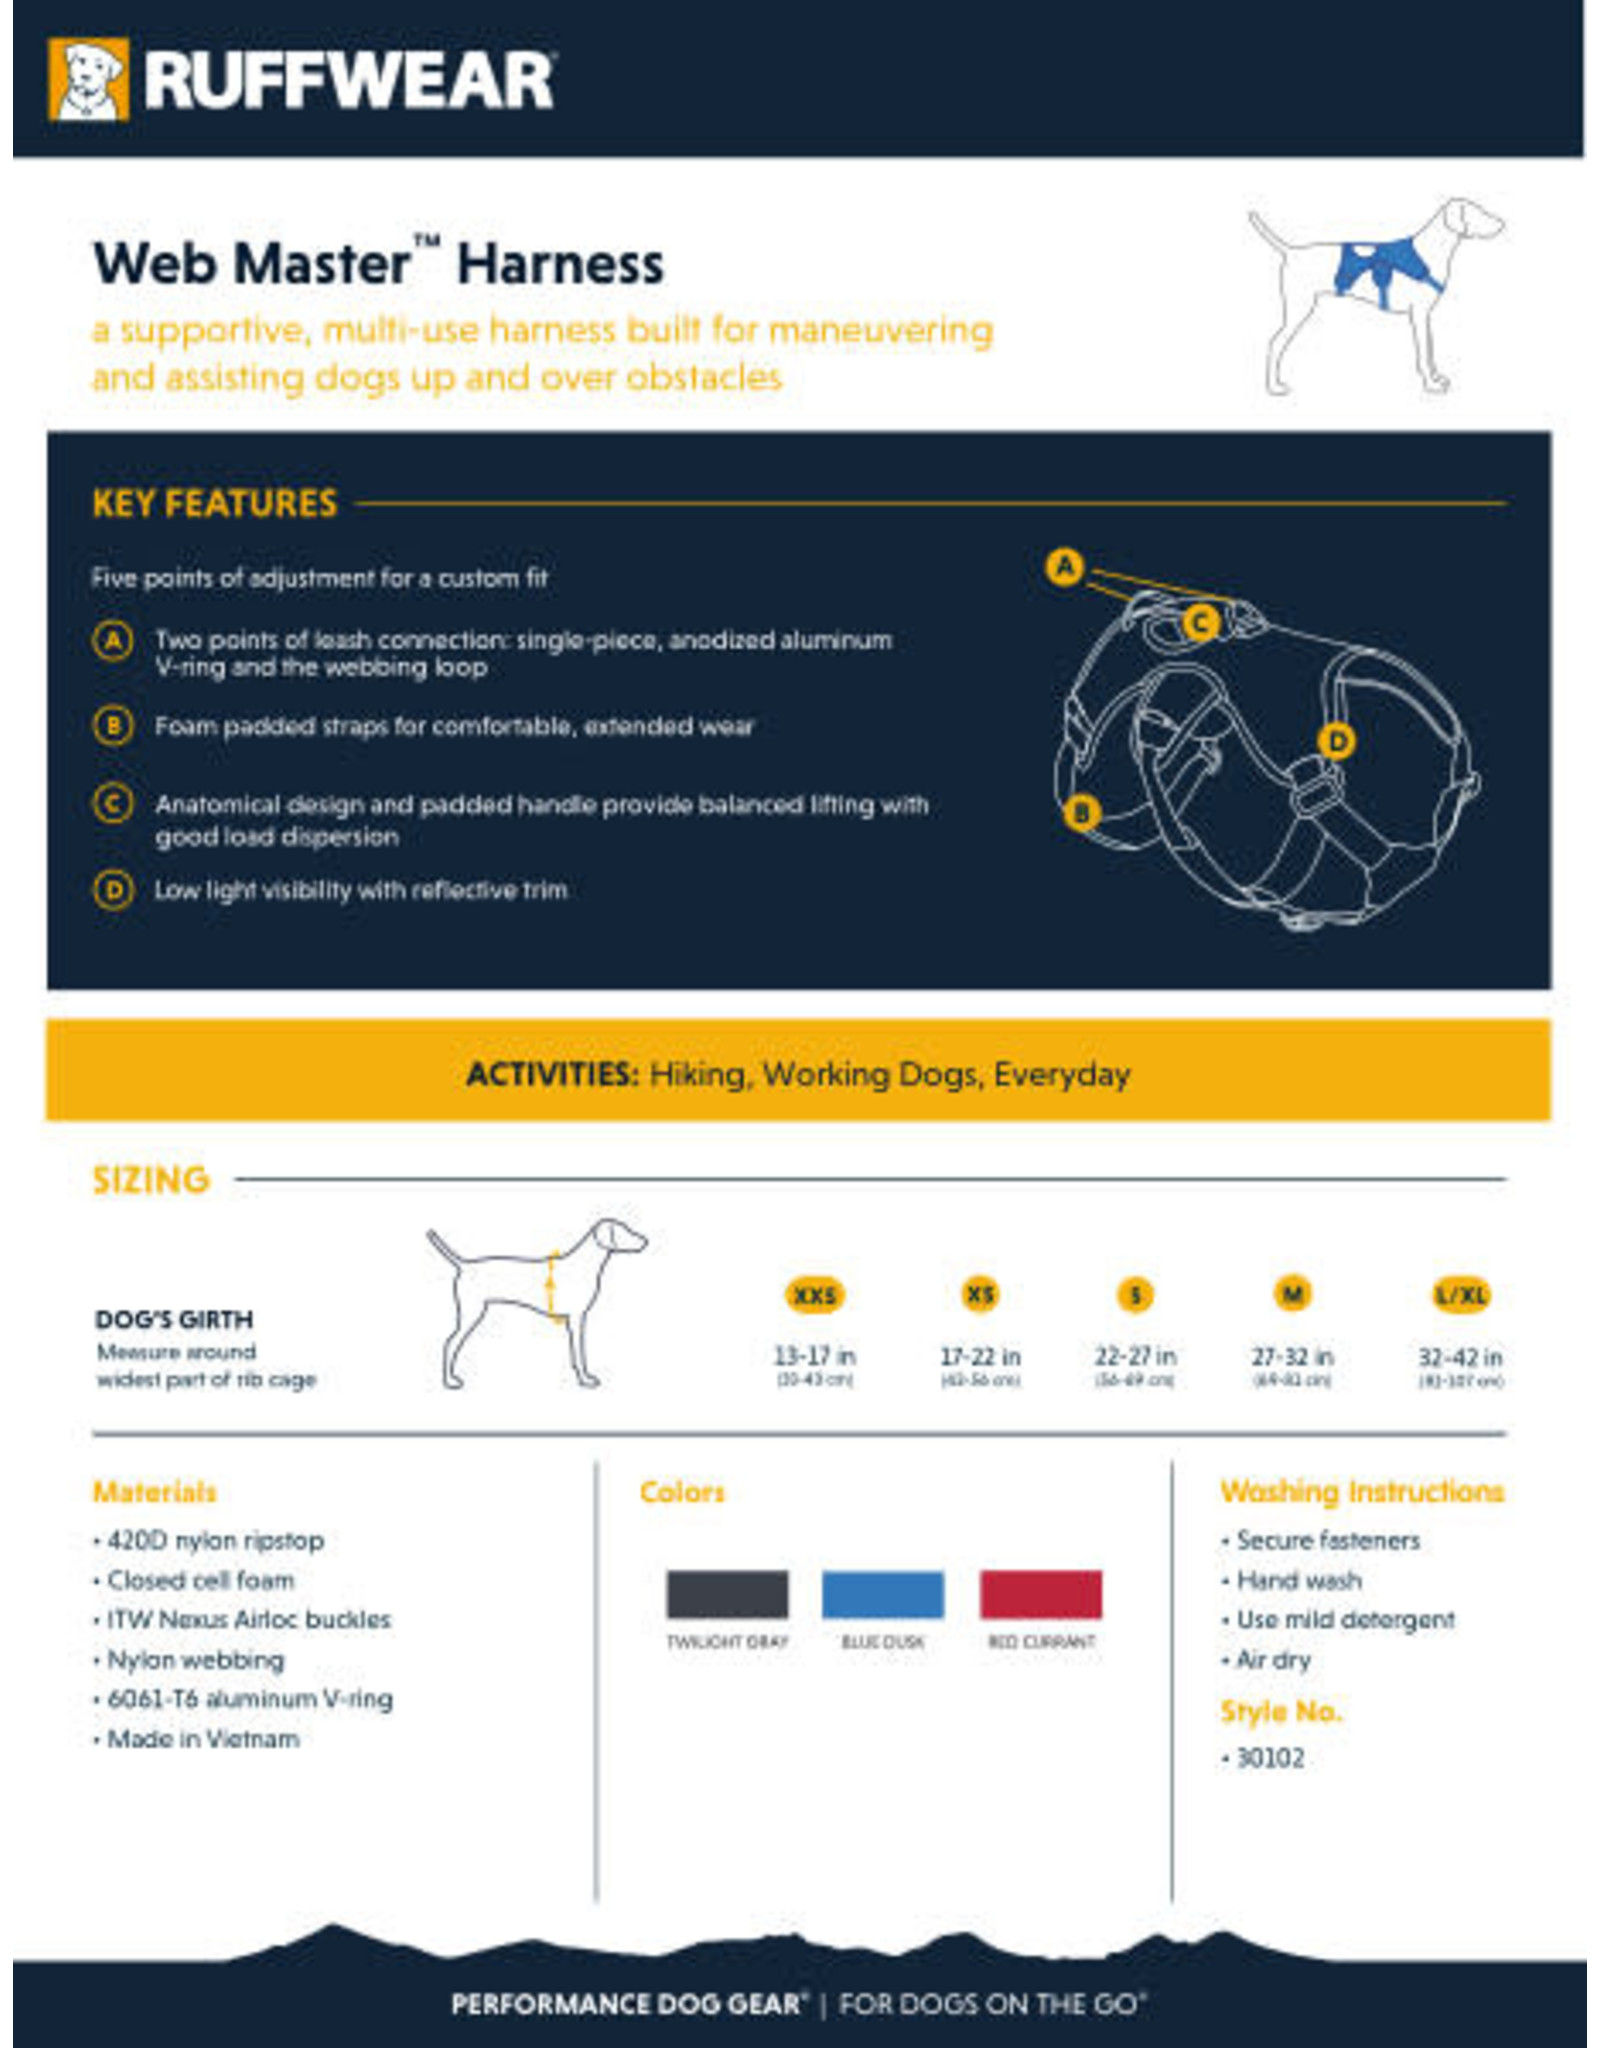 Web Master Harness: Blue Dusk, S